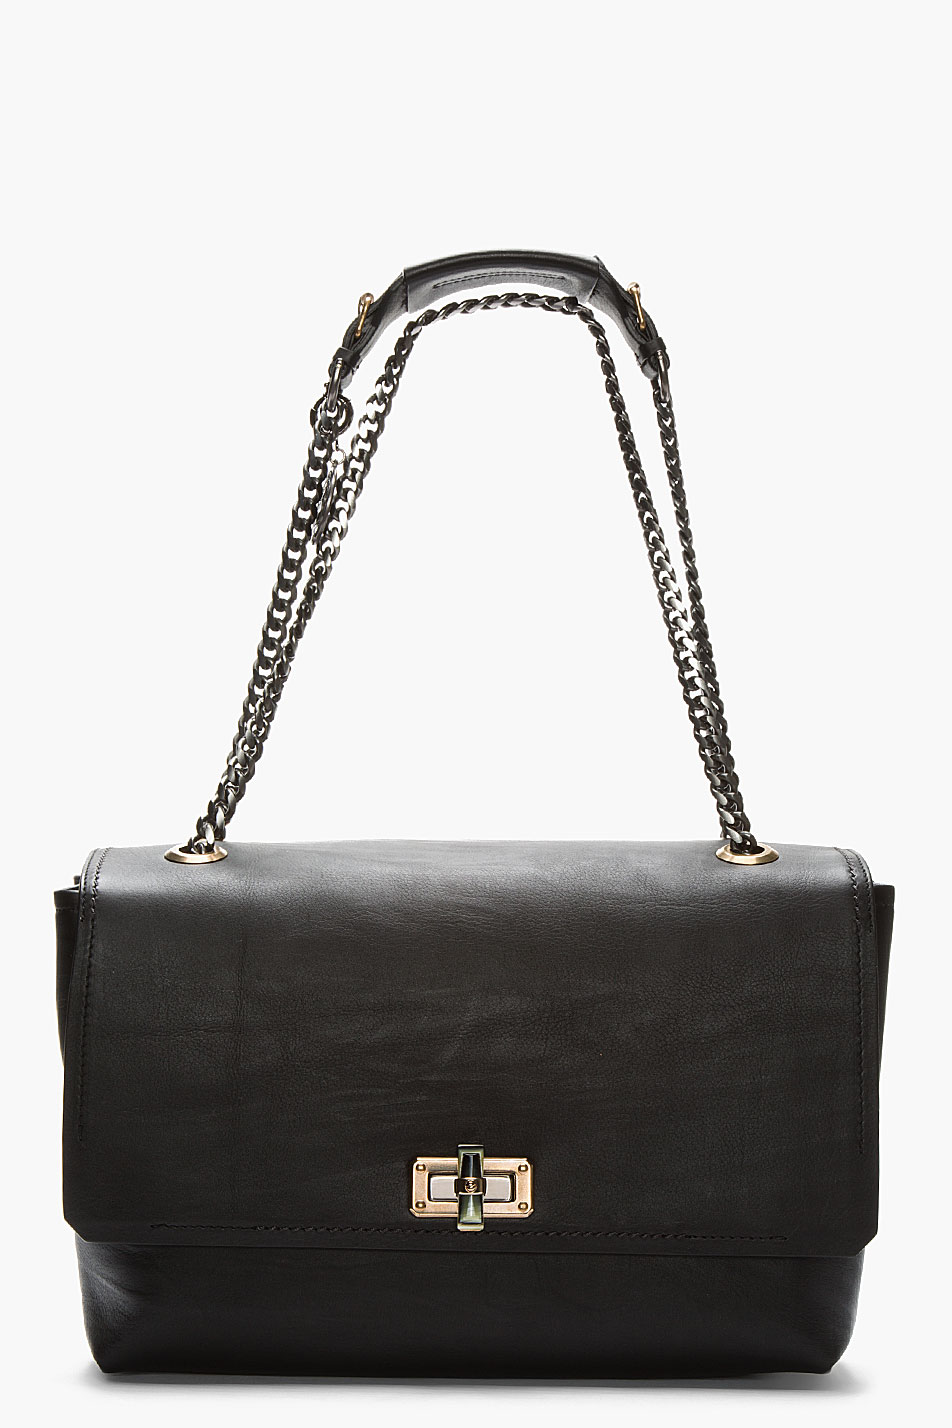 Lanvin Black Leather Chain_strap Happy Shoulder Bag in Black | Lyst